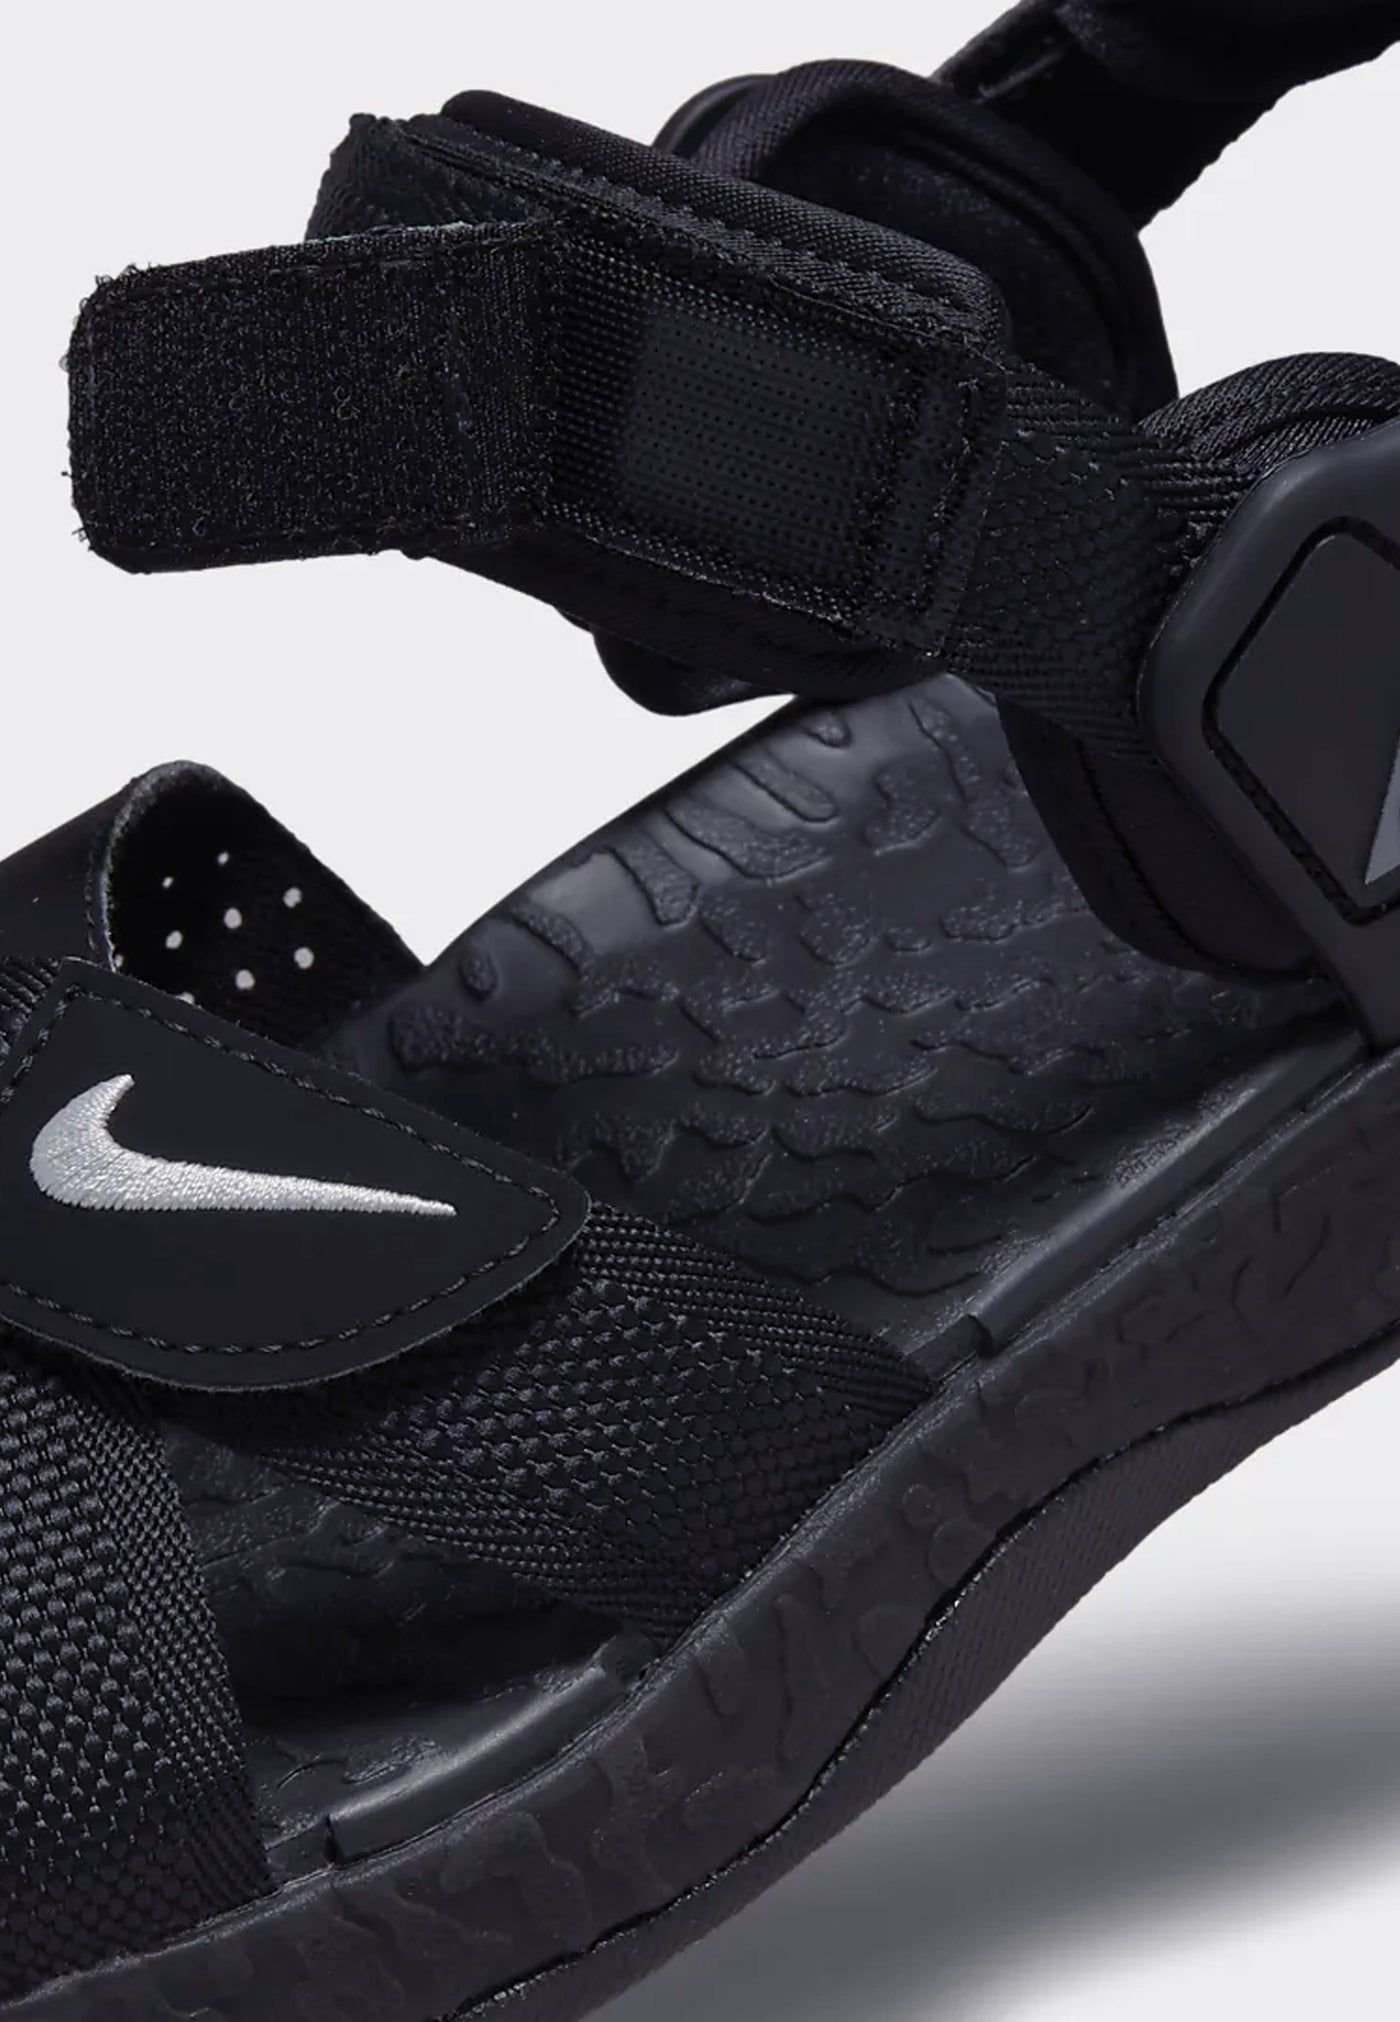 Shop Nike Acg Air Deschutz Sandals online | Lazada.com.ph